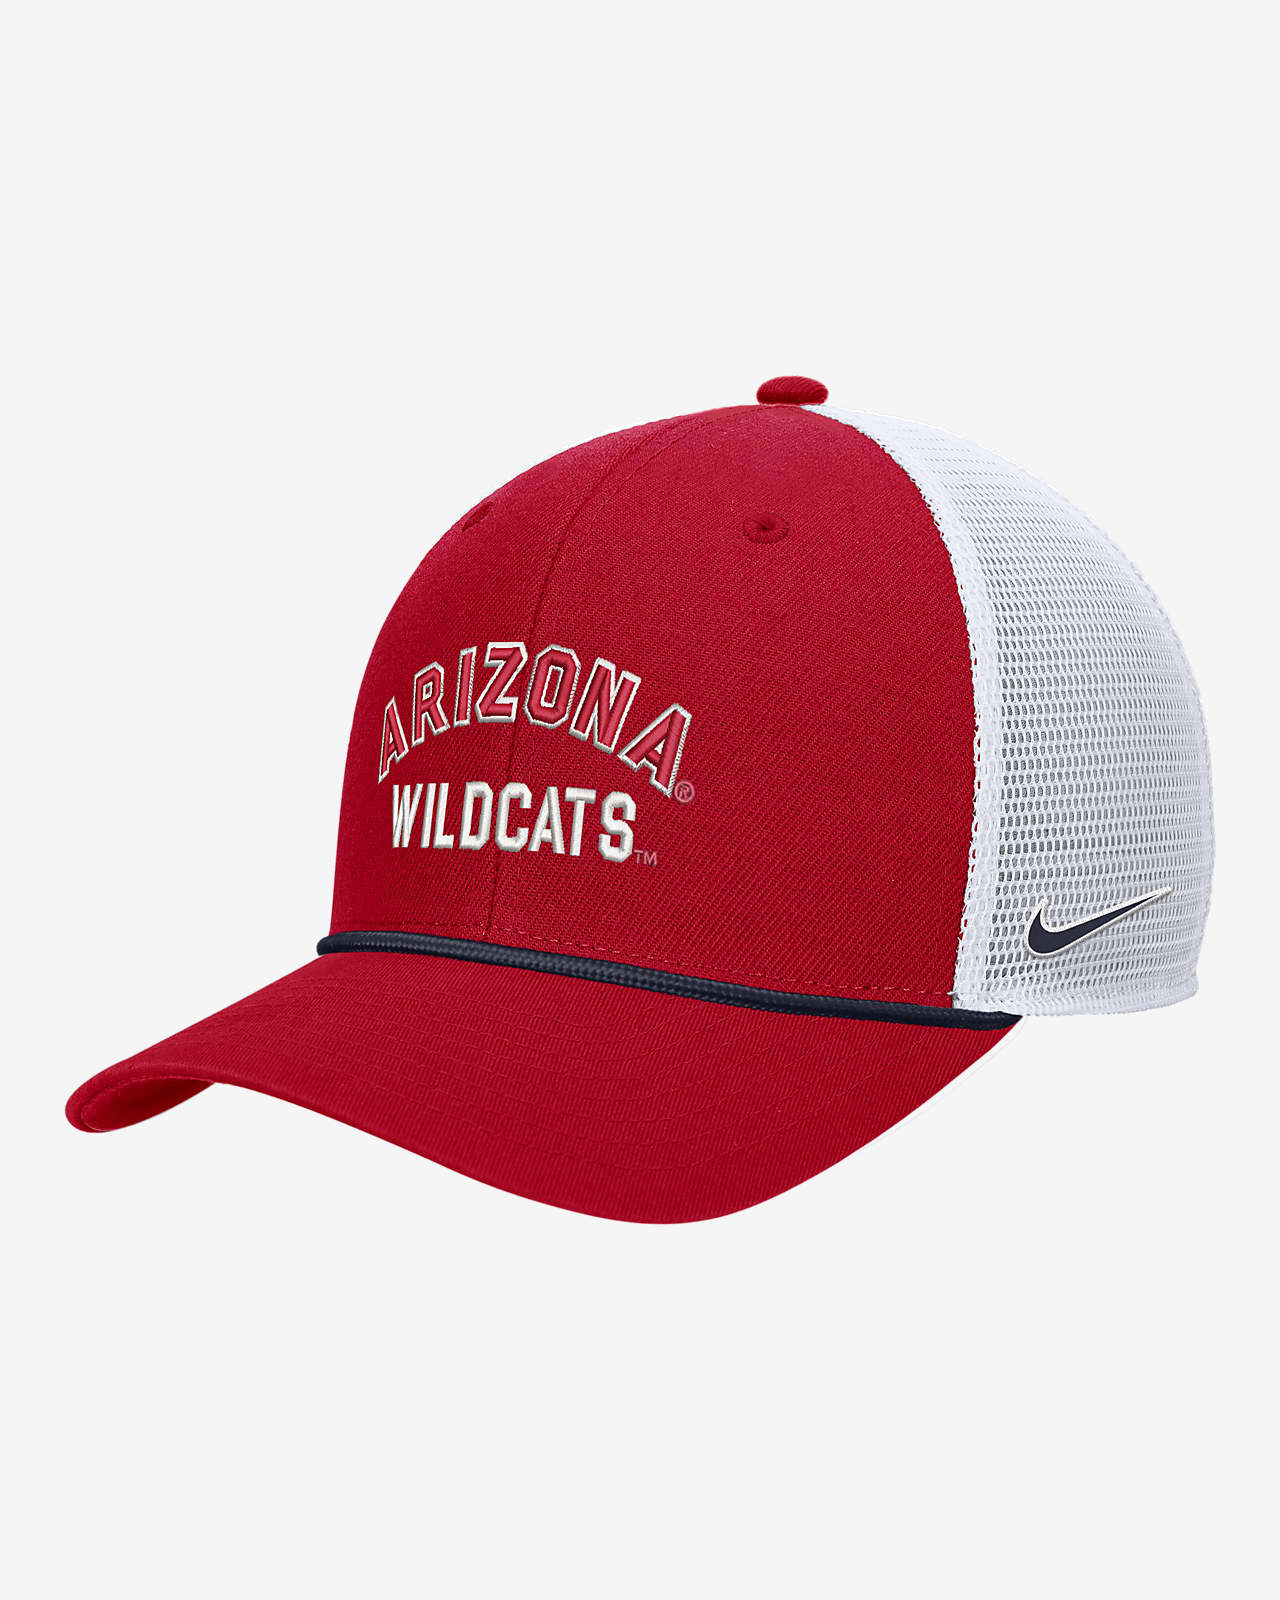 Arizona Nike College Snapback Trucker Hat